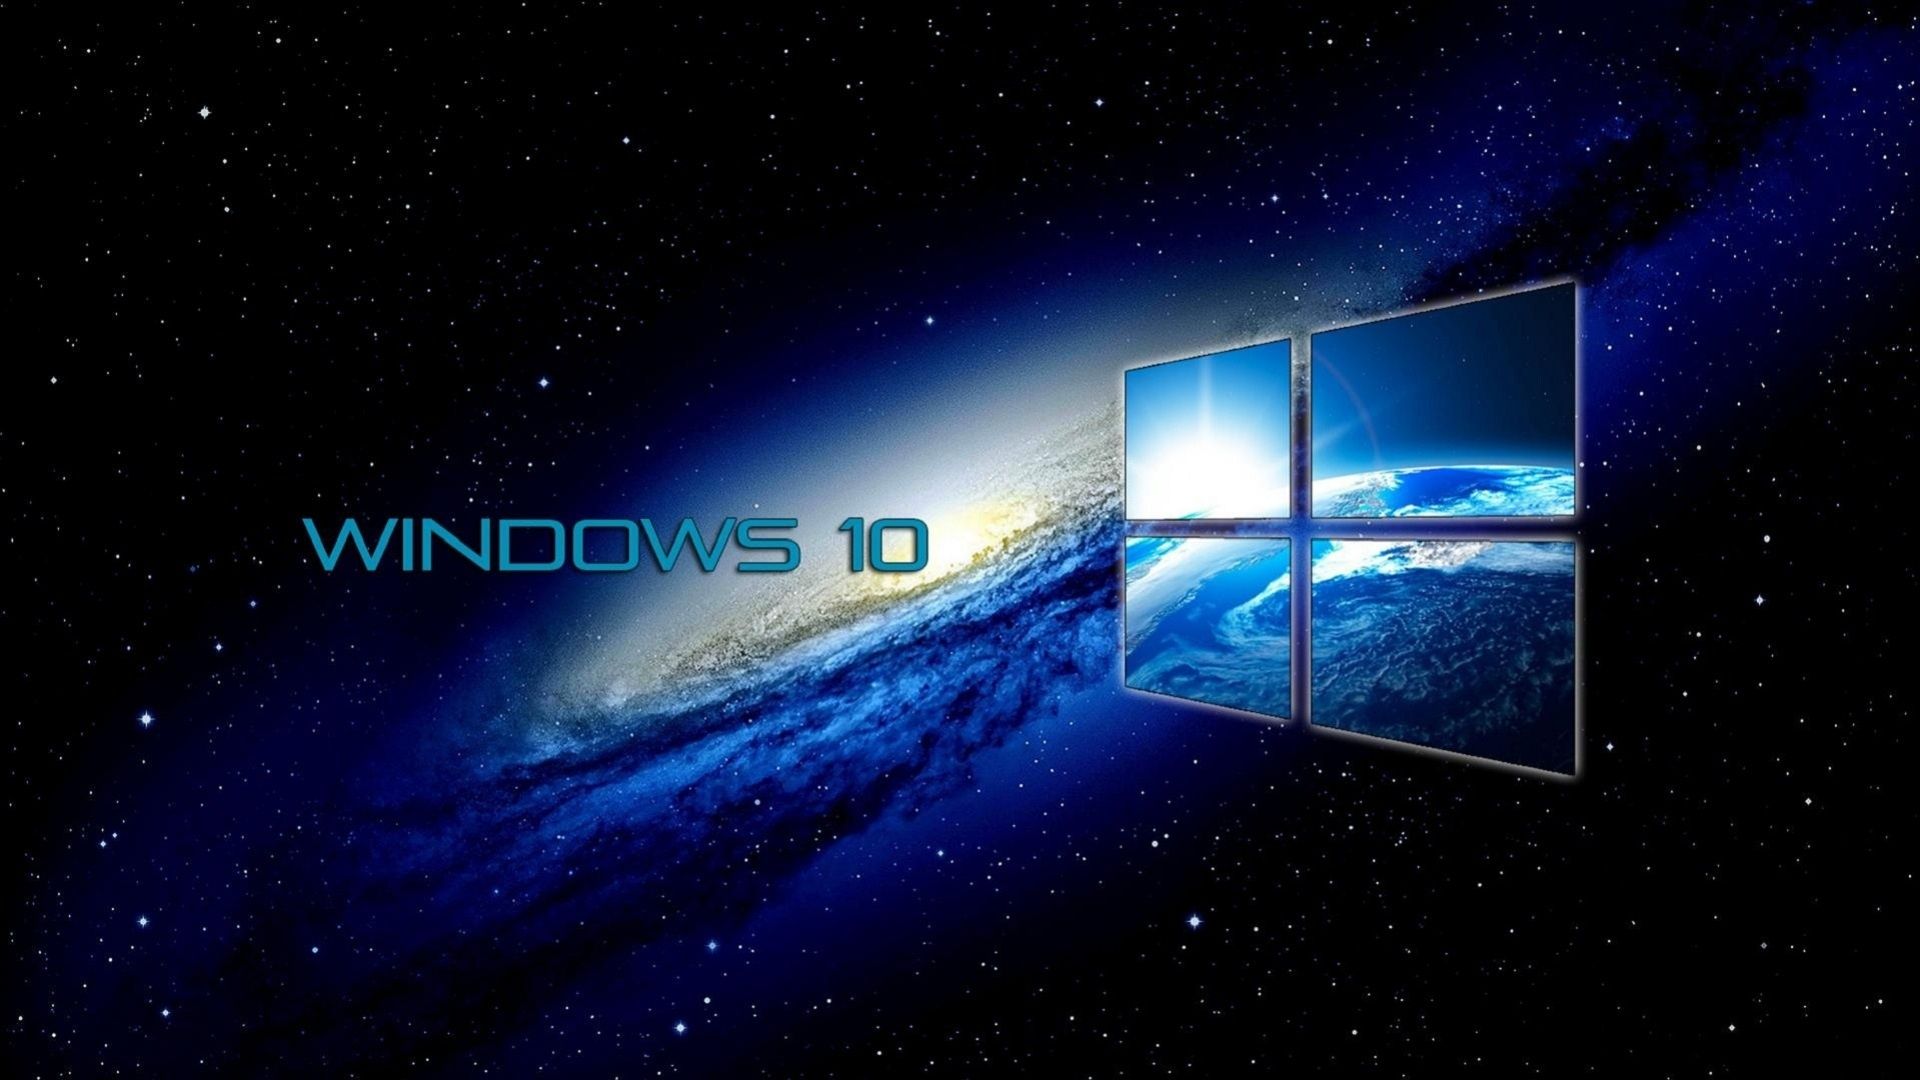 Windows 10 Hd 1080p background